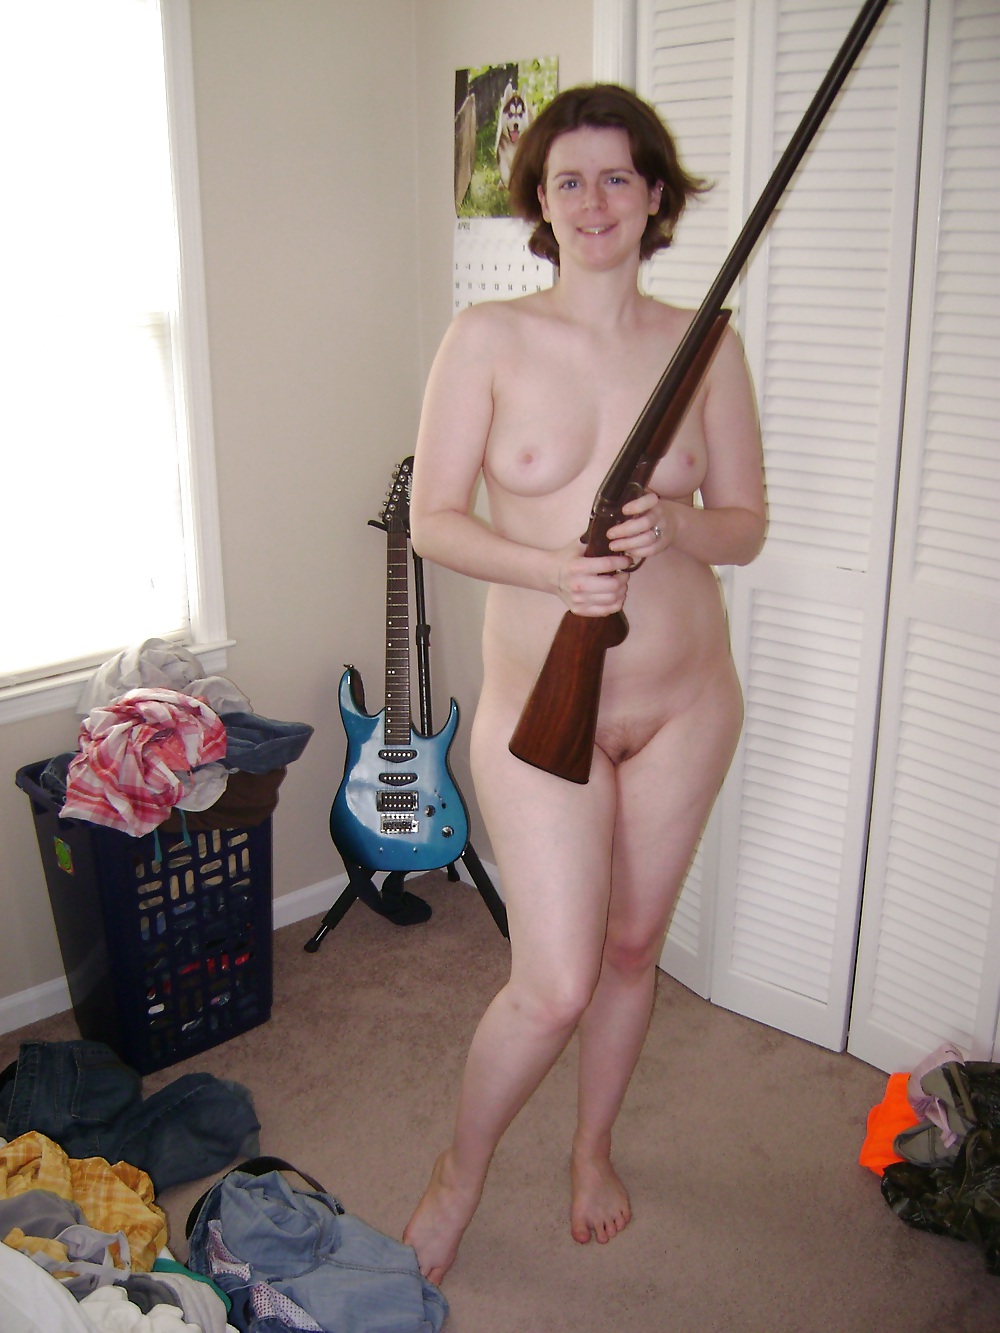 Nude Girls With Gun Porn Photo The Best Porn Website